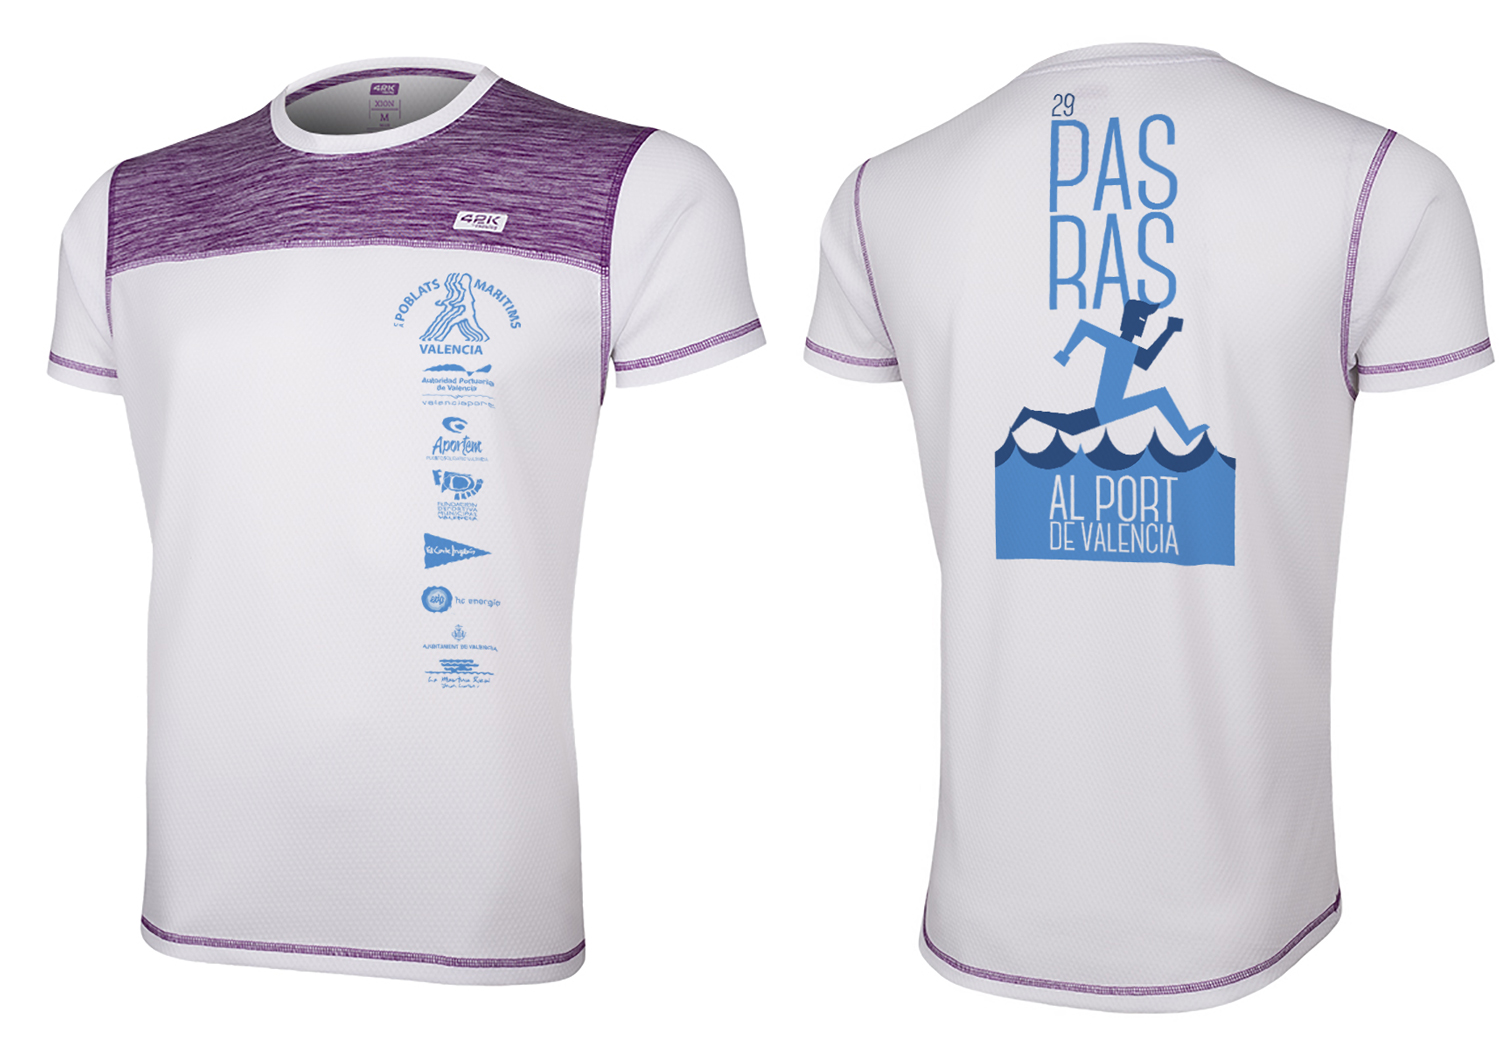 Diseño camisetas Pas Ras 2016